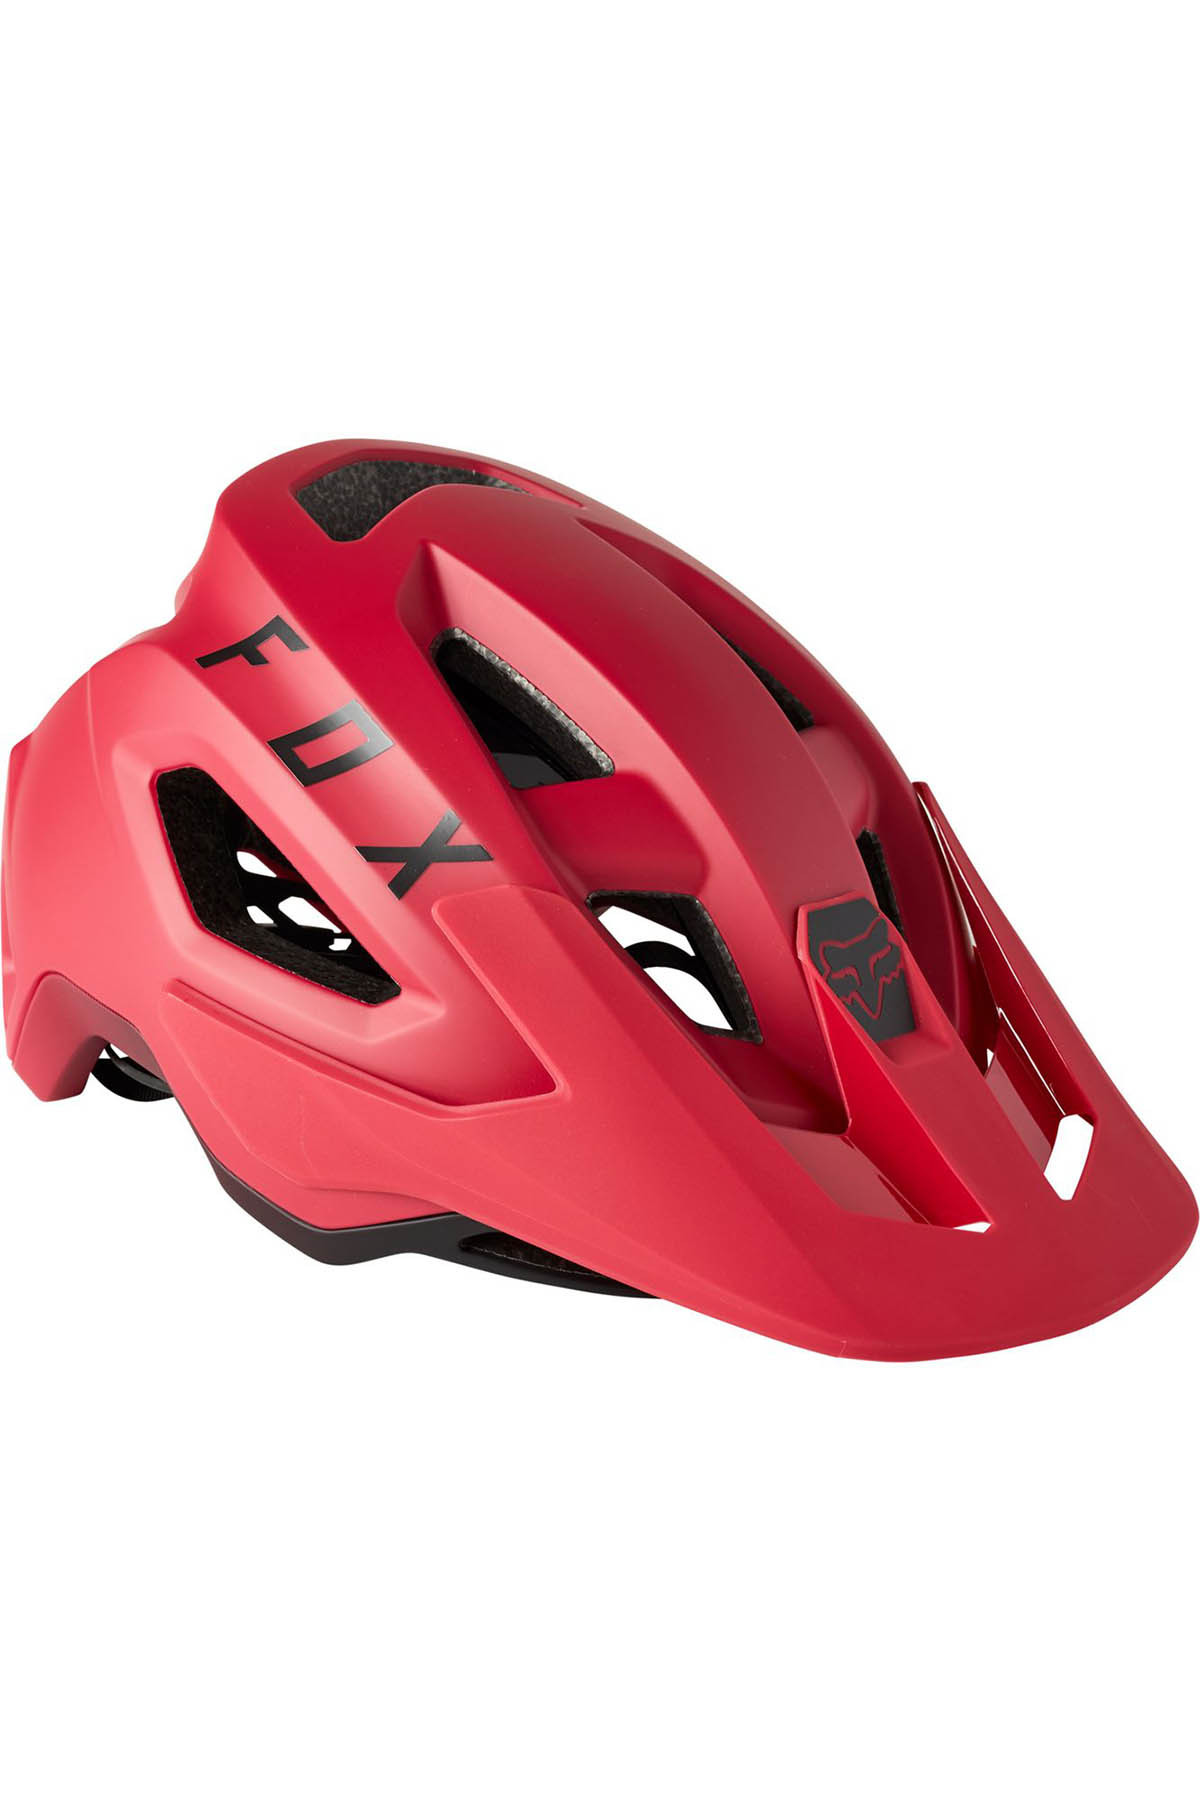 Fox Speedframe Helmet Mips - Chili